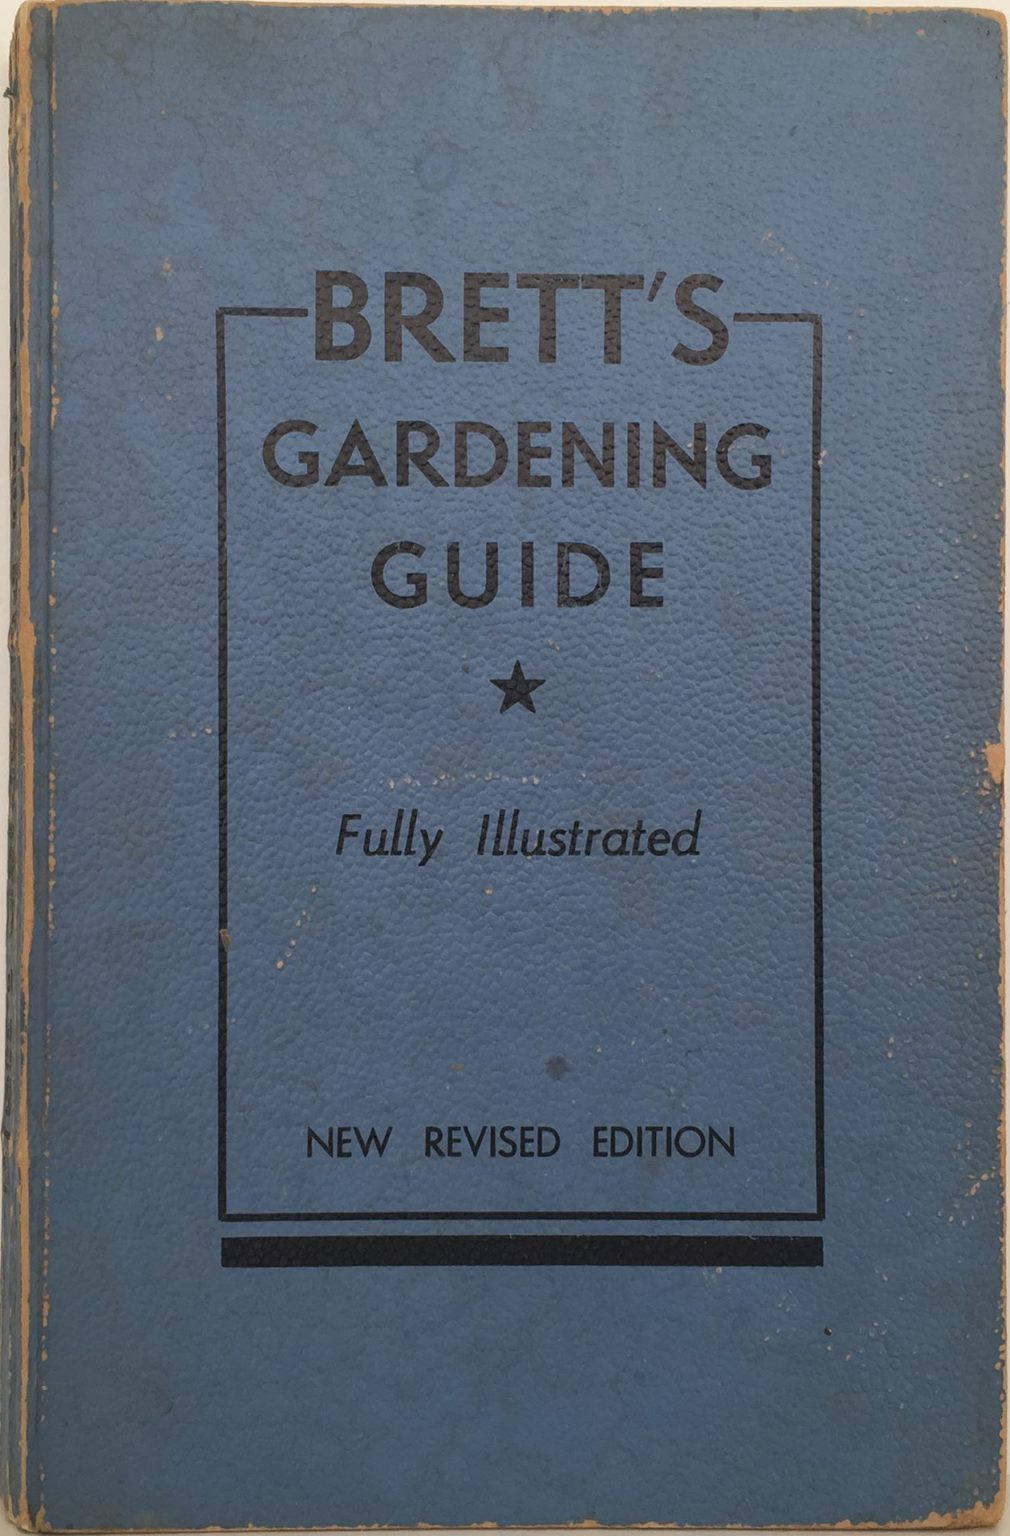 BRETT'S GARDENING GUIDE: 1946 New Revised Edition